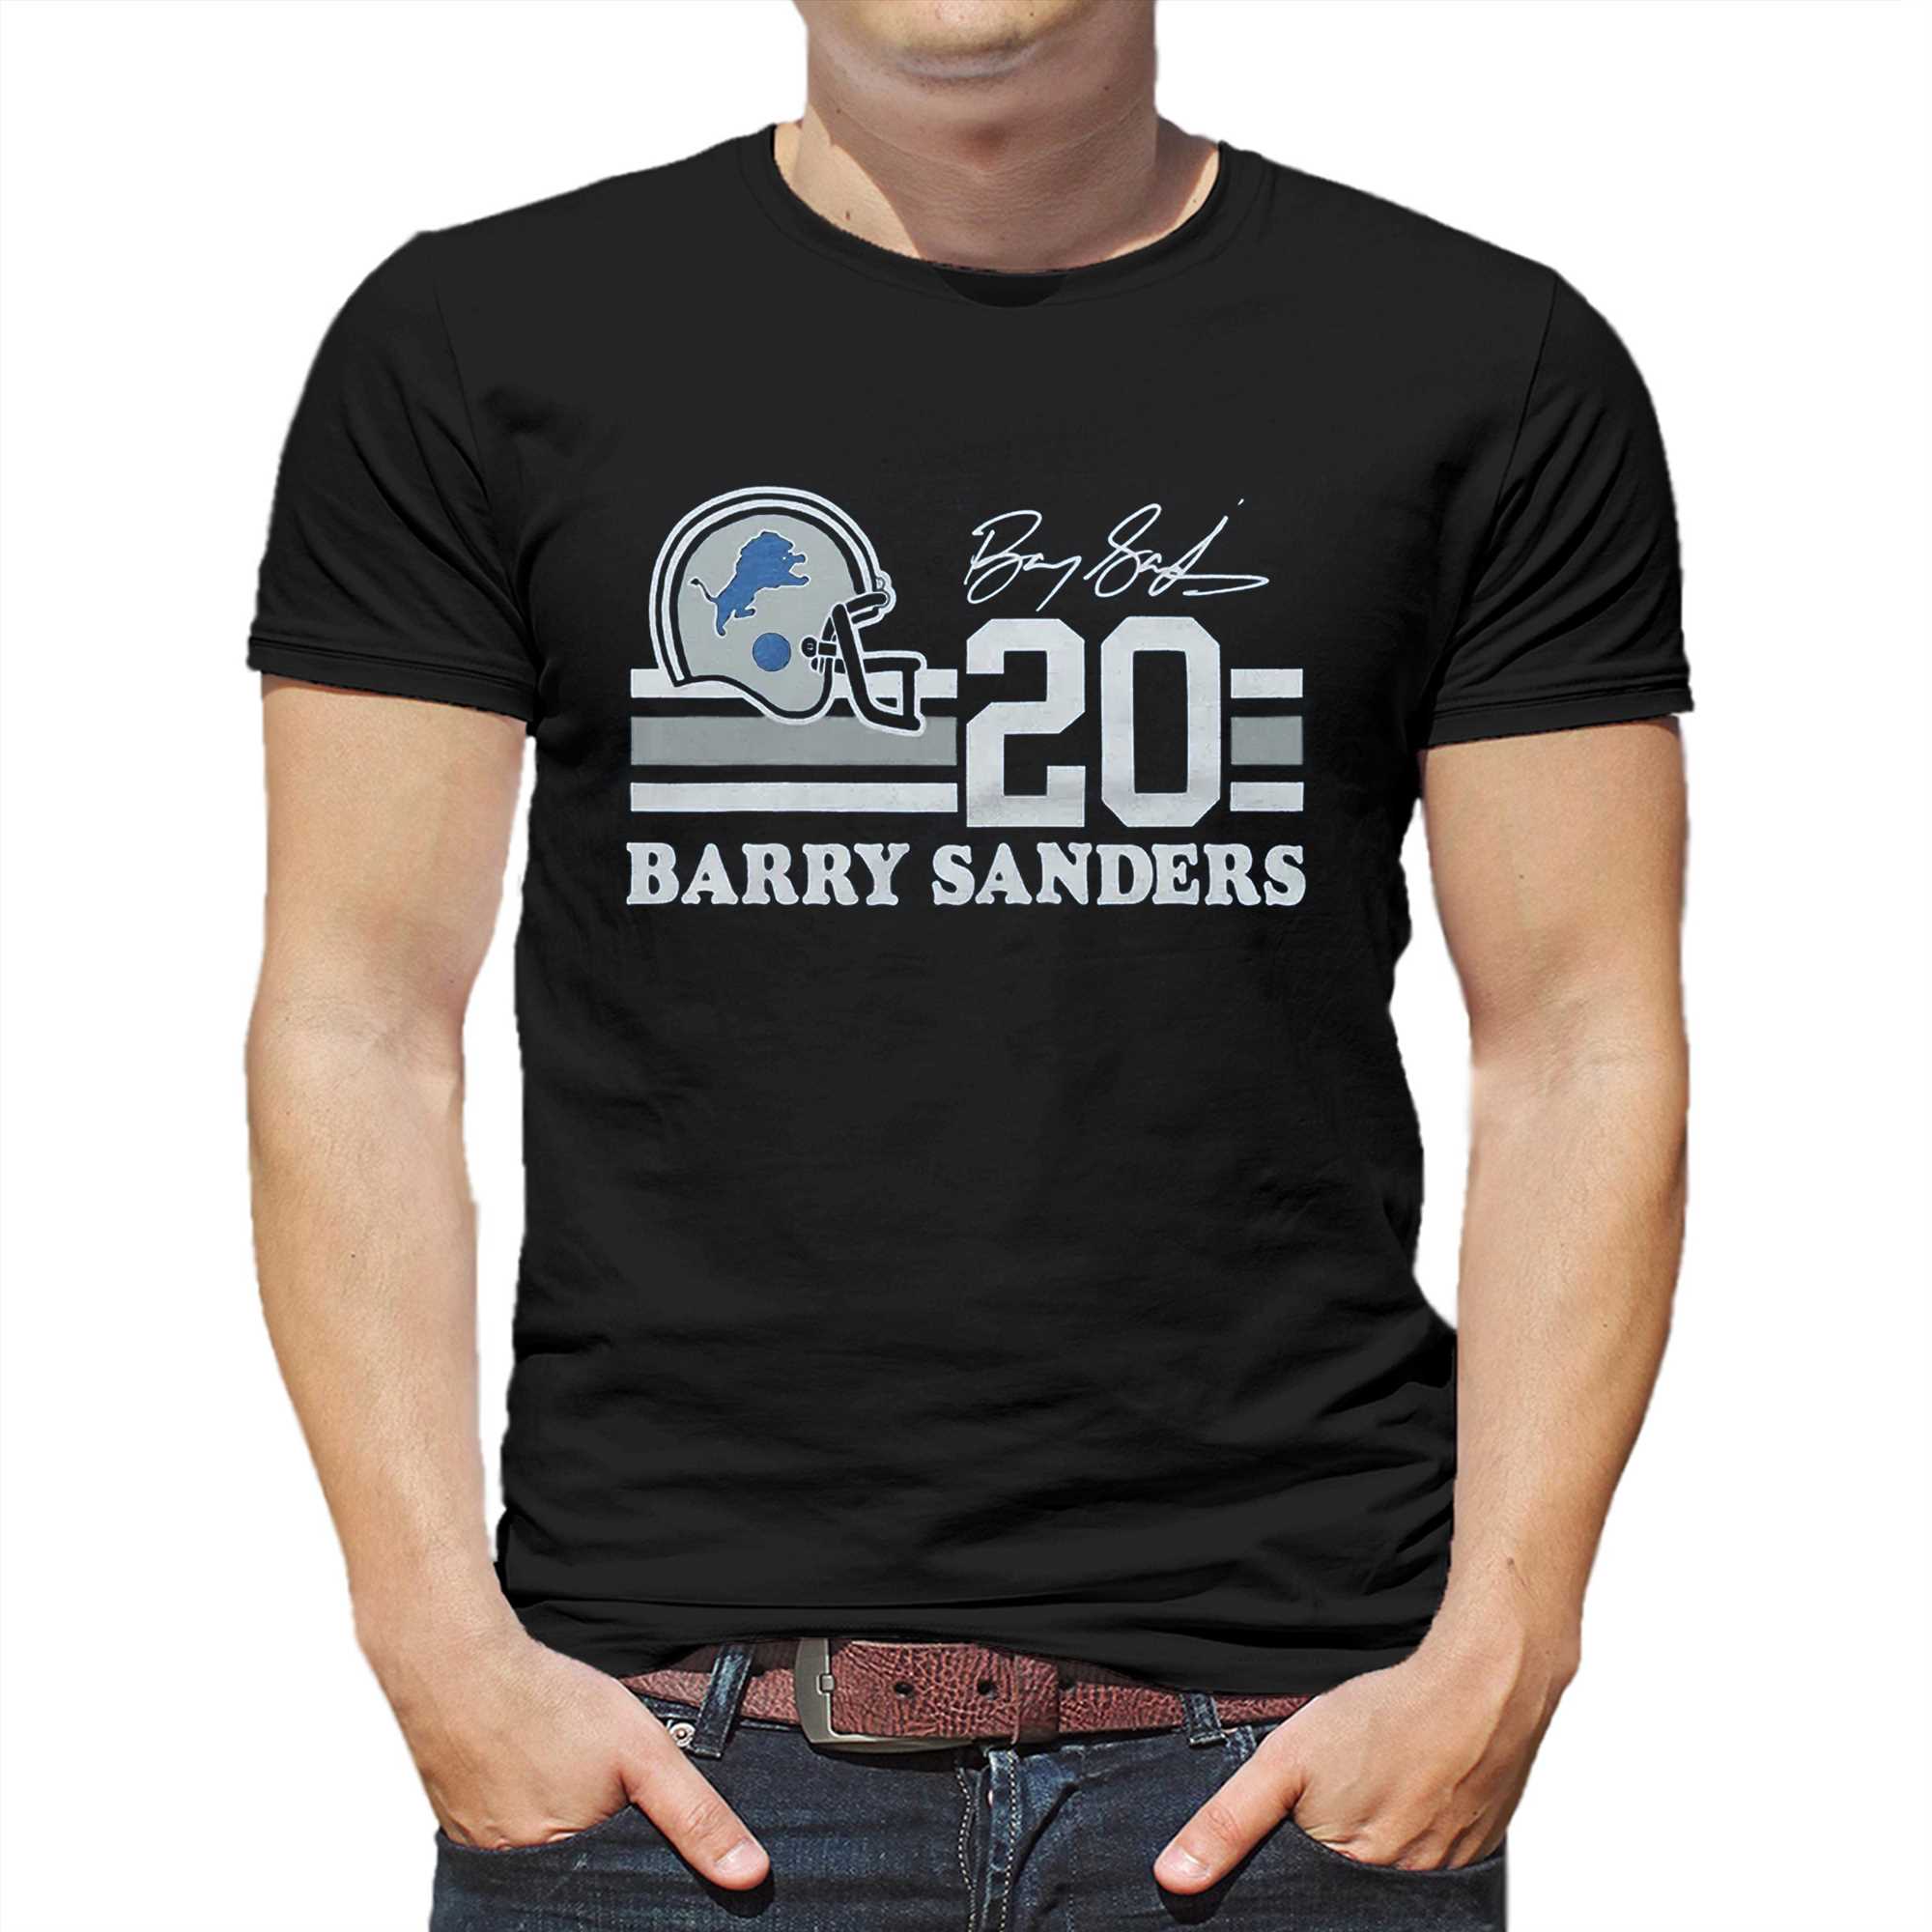 barry sanders t shirt